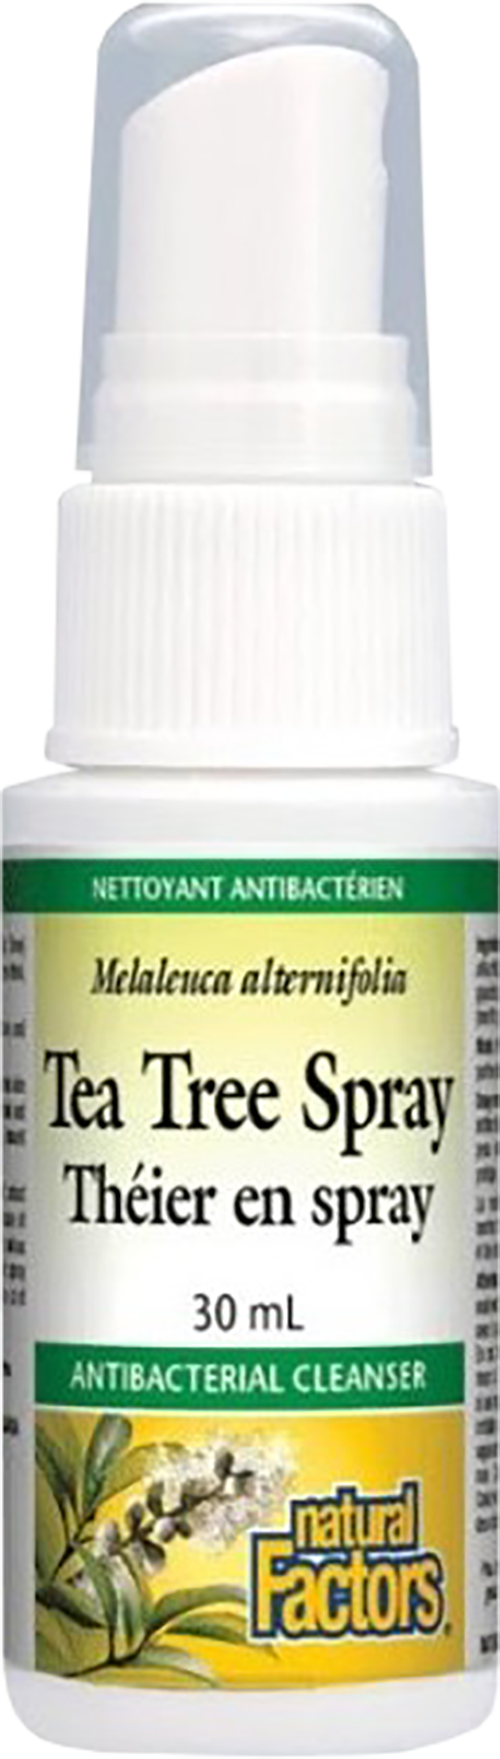 Tea Tree Spray 30ml - BadiZdrav.BG